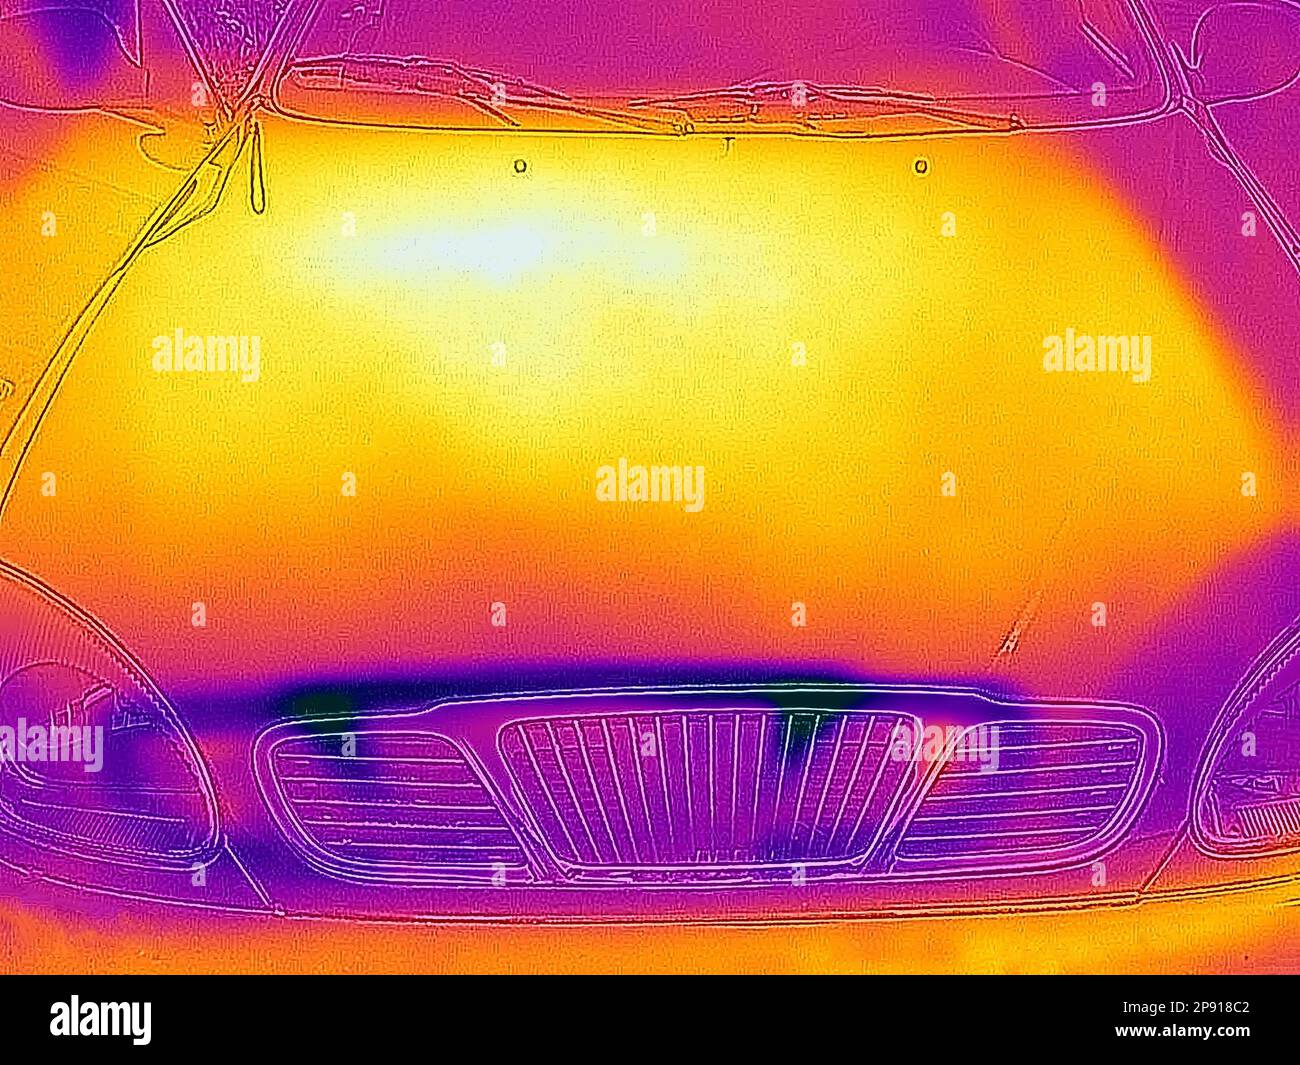 Car engine infrared thermal image -Fotos und -Bildmaterial in hoher  Auflösung – Alamy